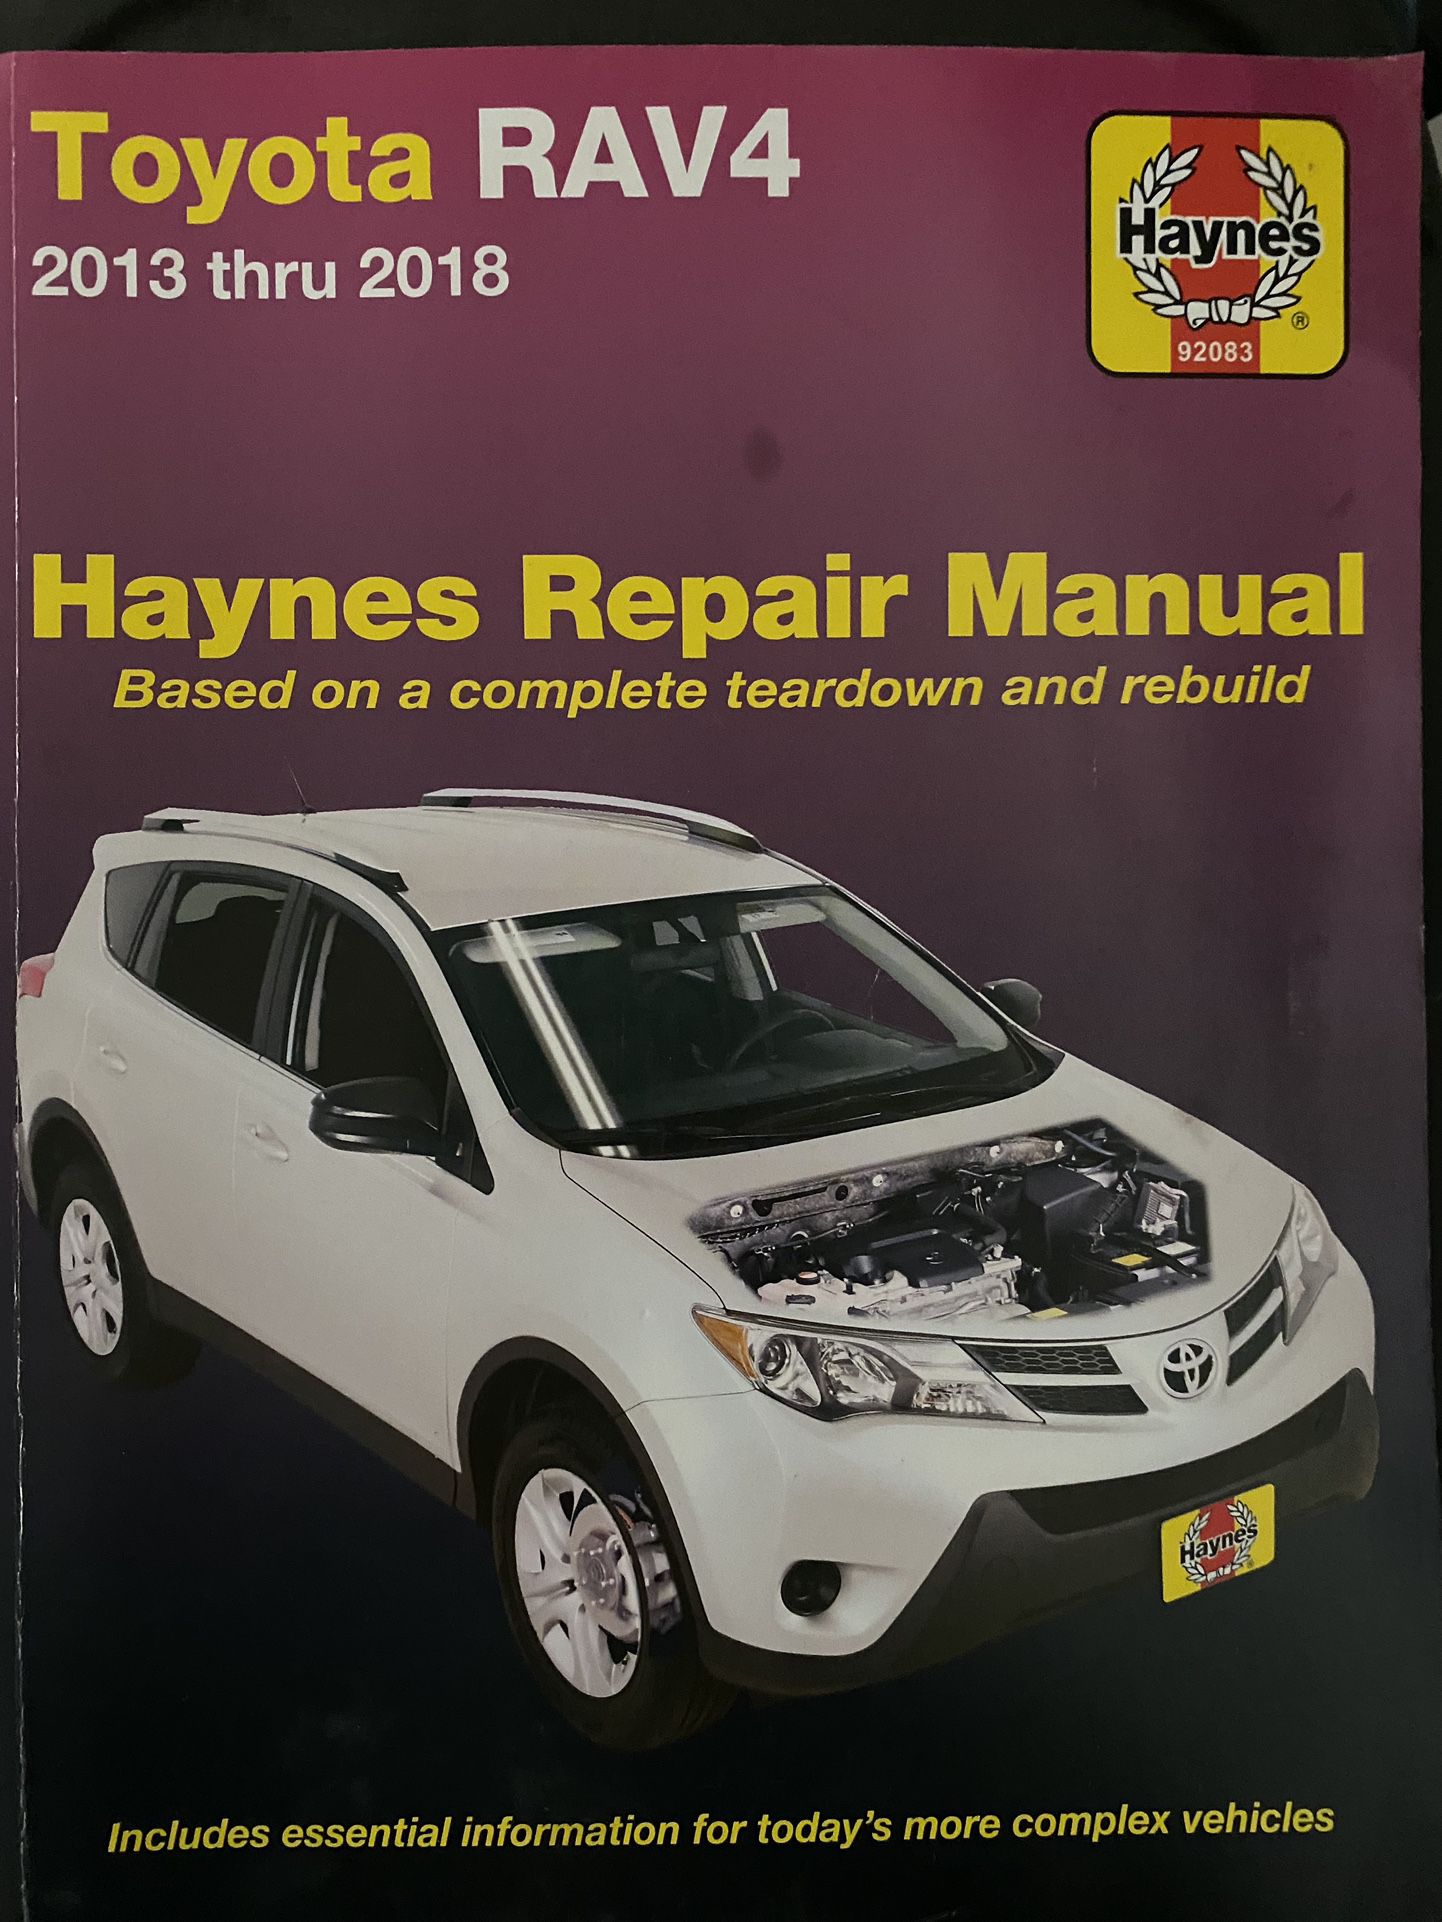 Toyota RAV4 Haynes Manual 2013-2018